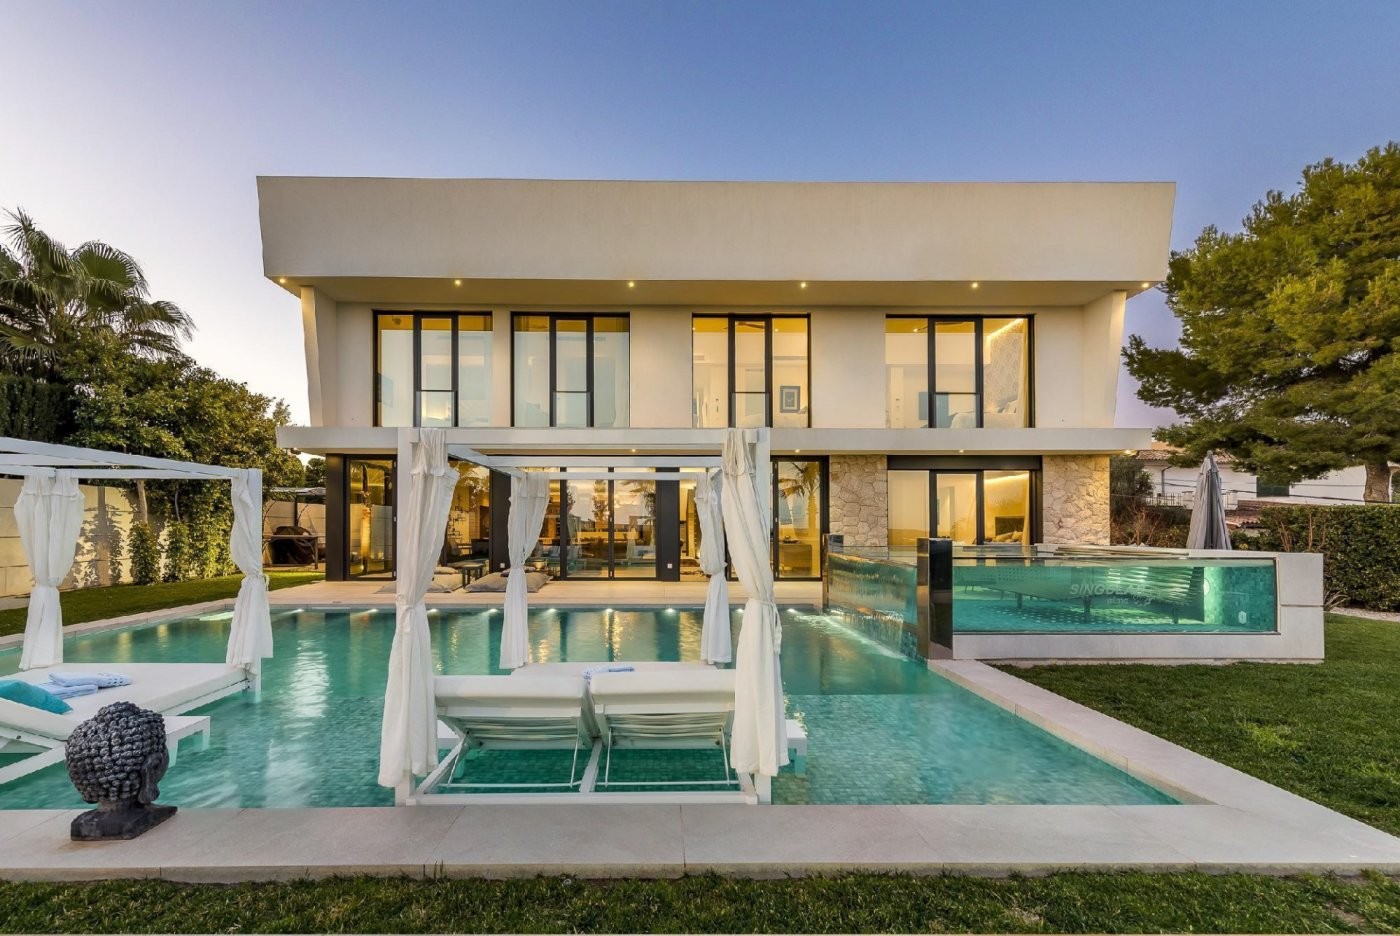 Spectacular luxury villa with a unique design in Santa Ponsa